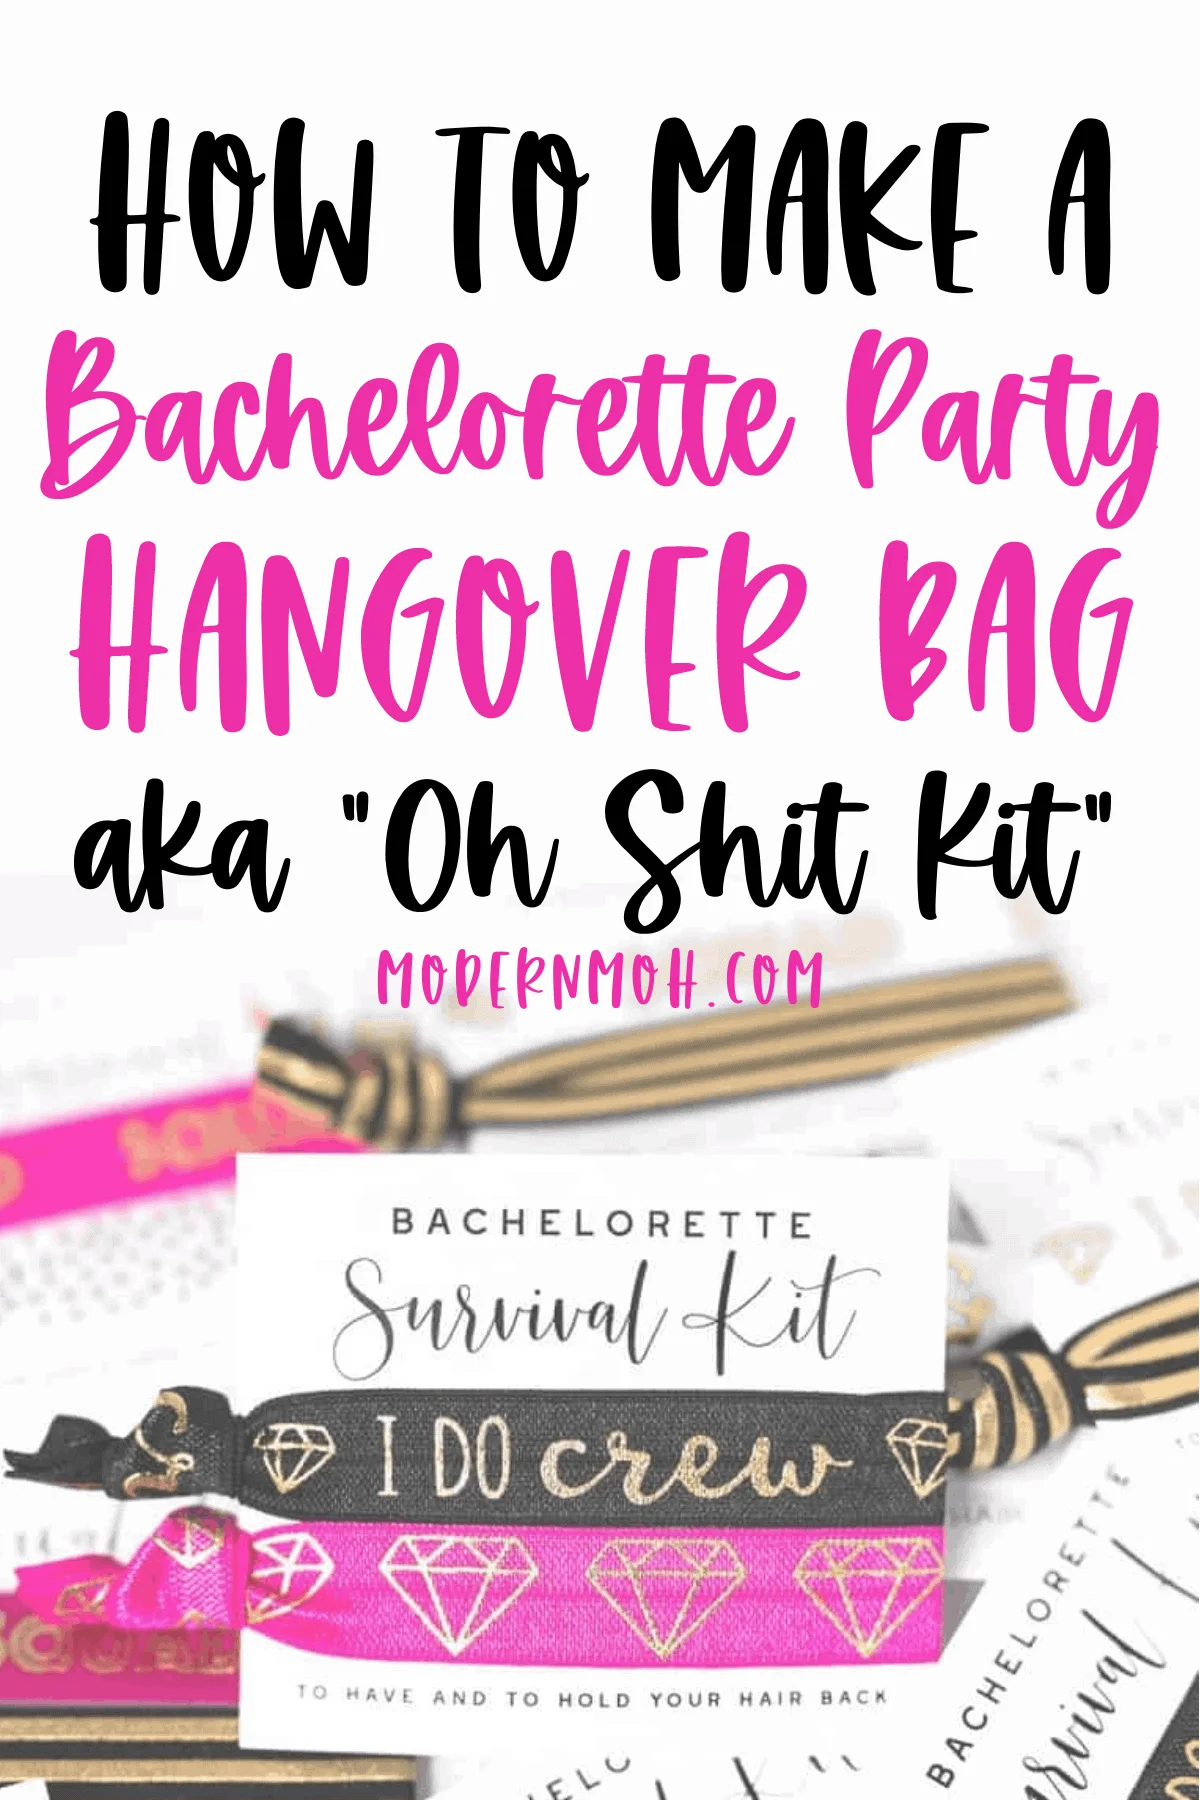 4 Pack of Hangover Kit Supplies, Bags, Kits, Items, Bachelorette